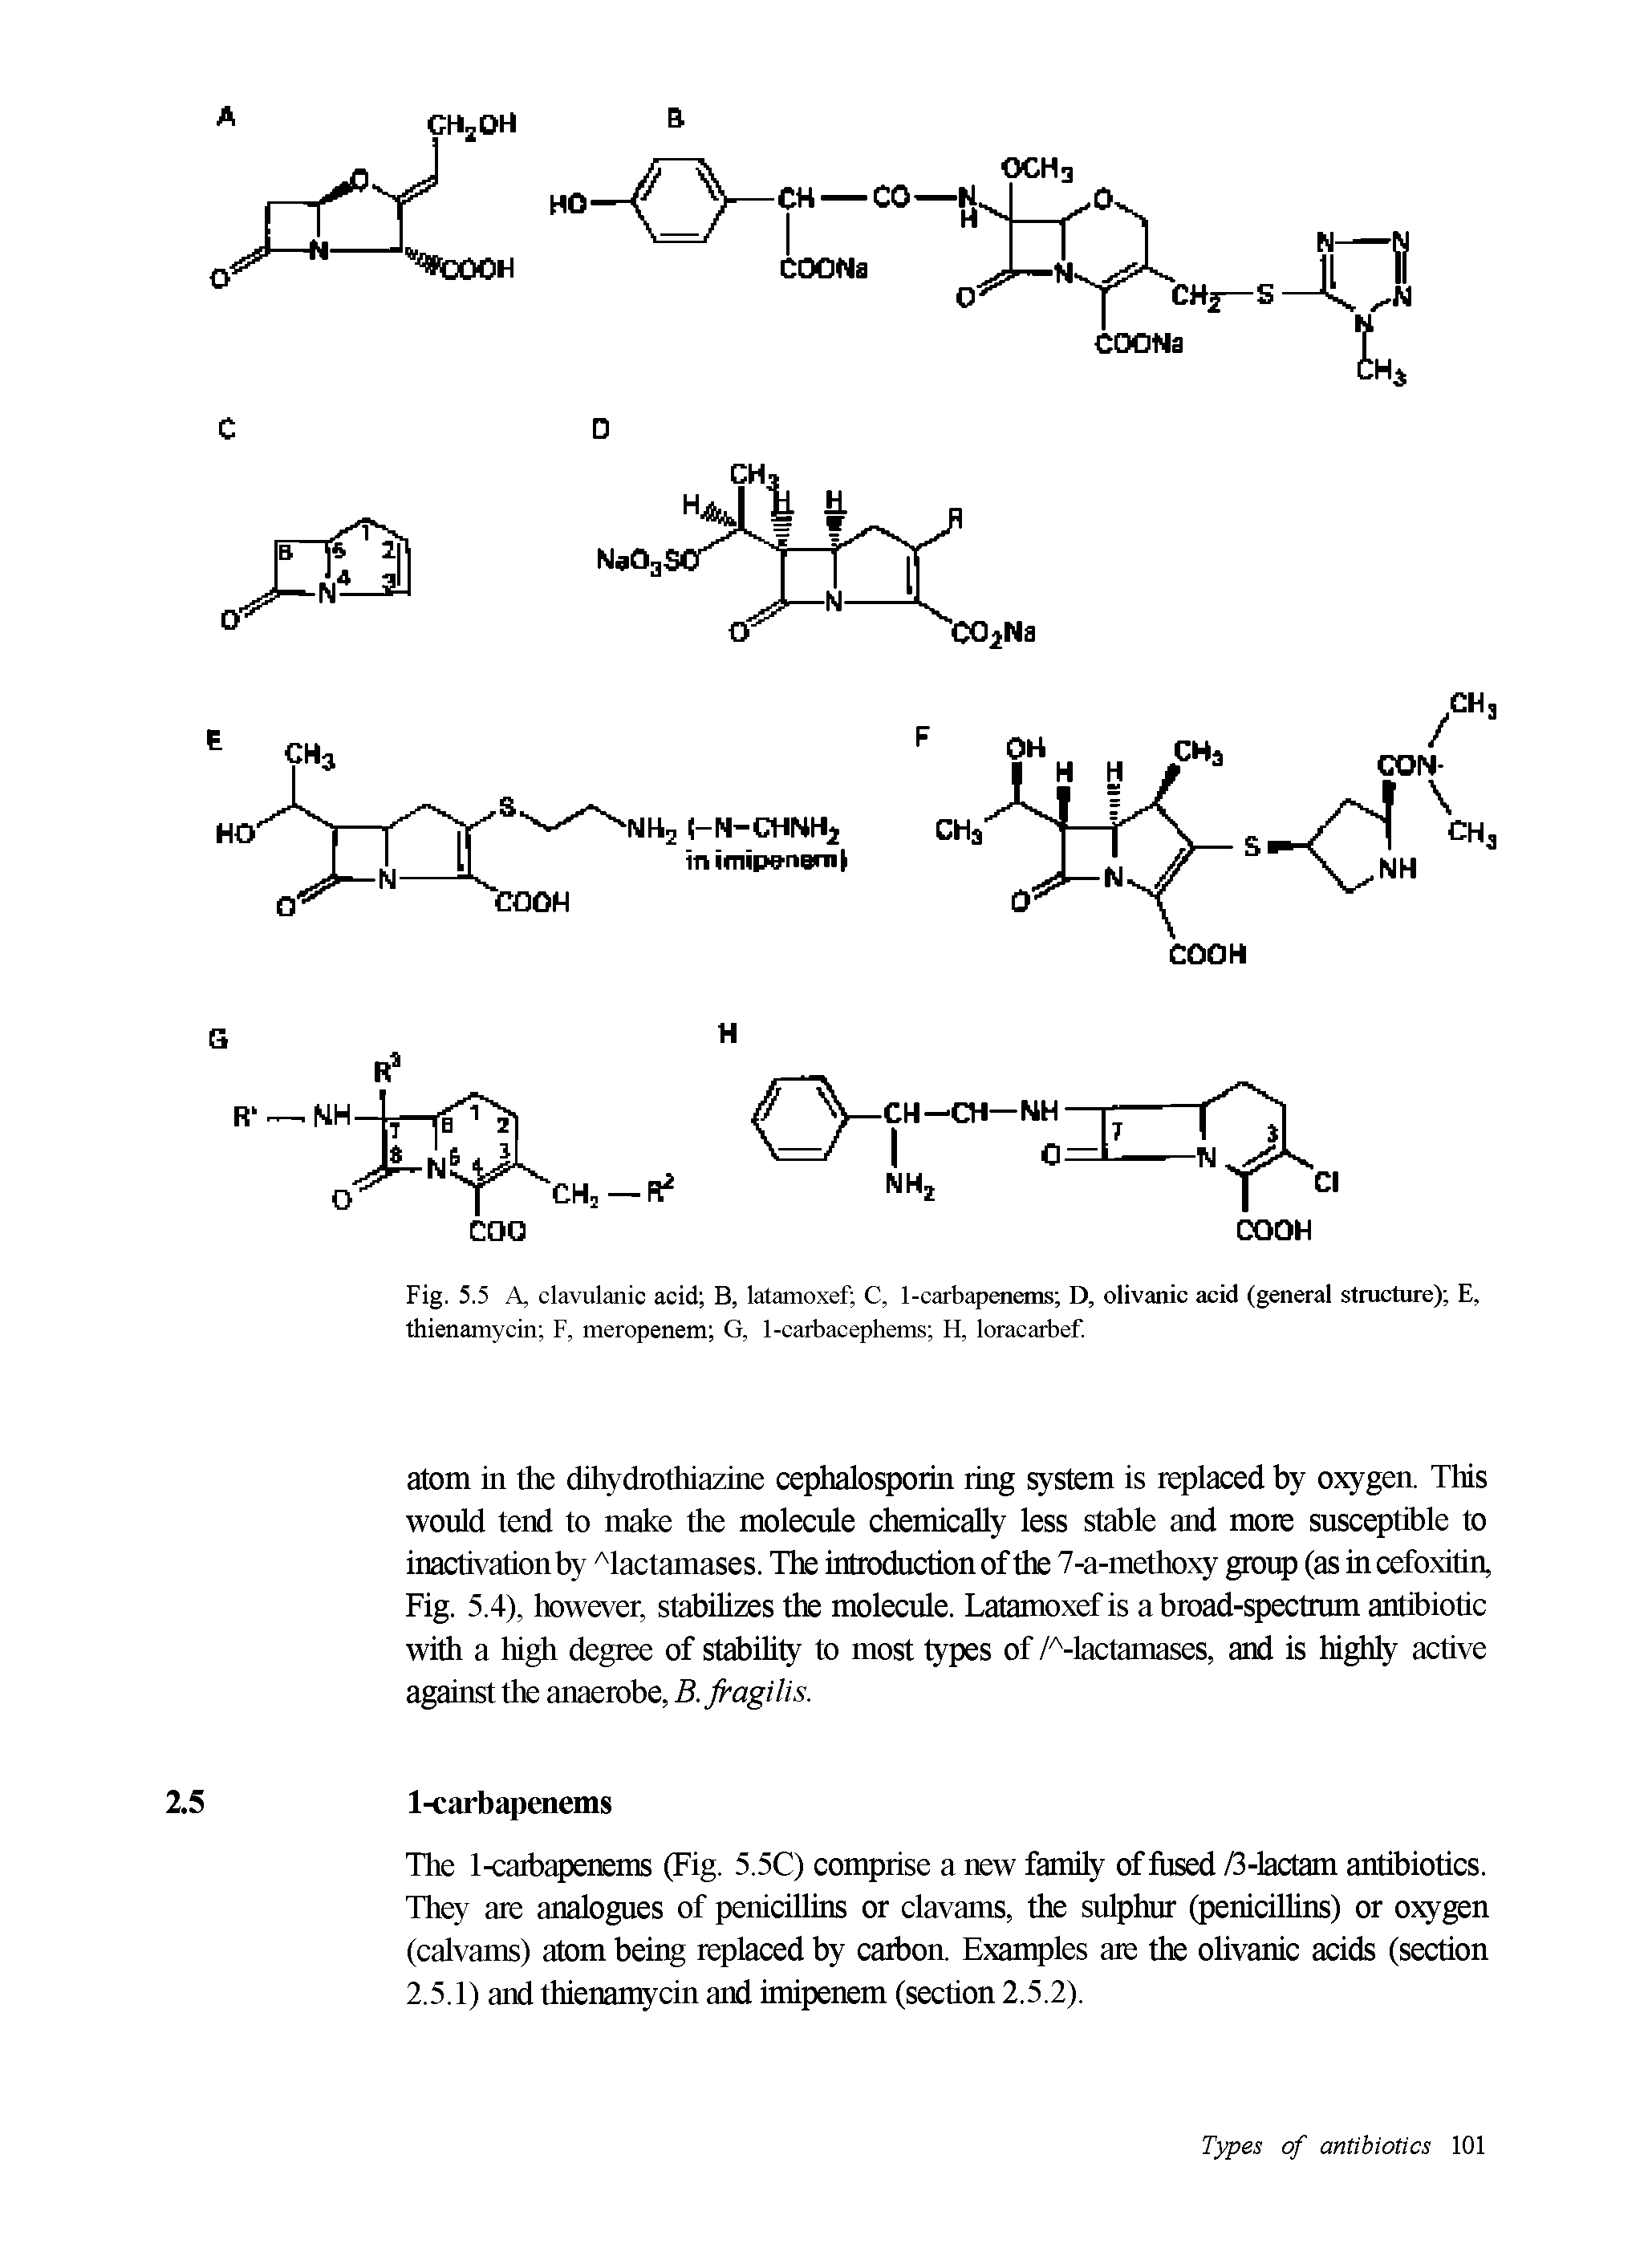 Fig. 5.5 A, clavulanic acid B, latamoxef C, 1-carbapenems D, olivanic acid (general structure) E, thienamycin F, meropenem G, 1-carbacephems H, loracarbef.